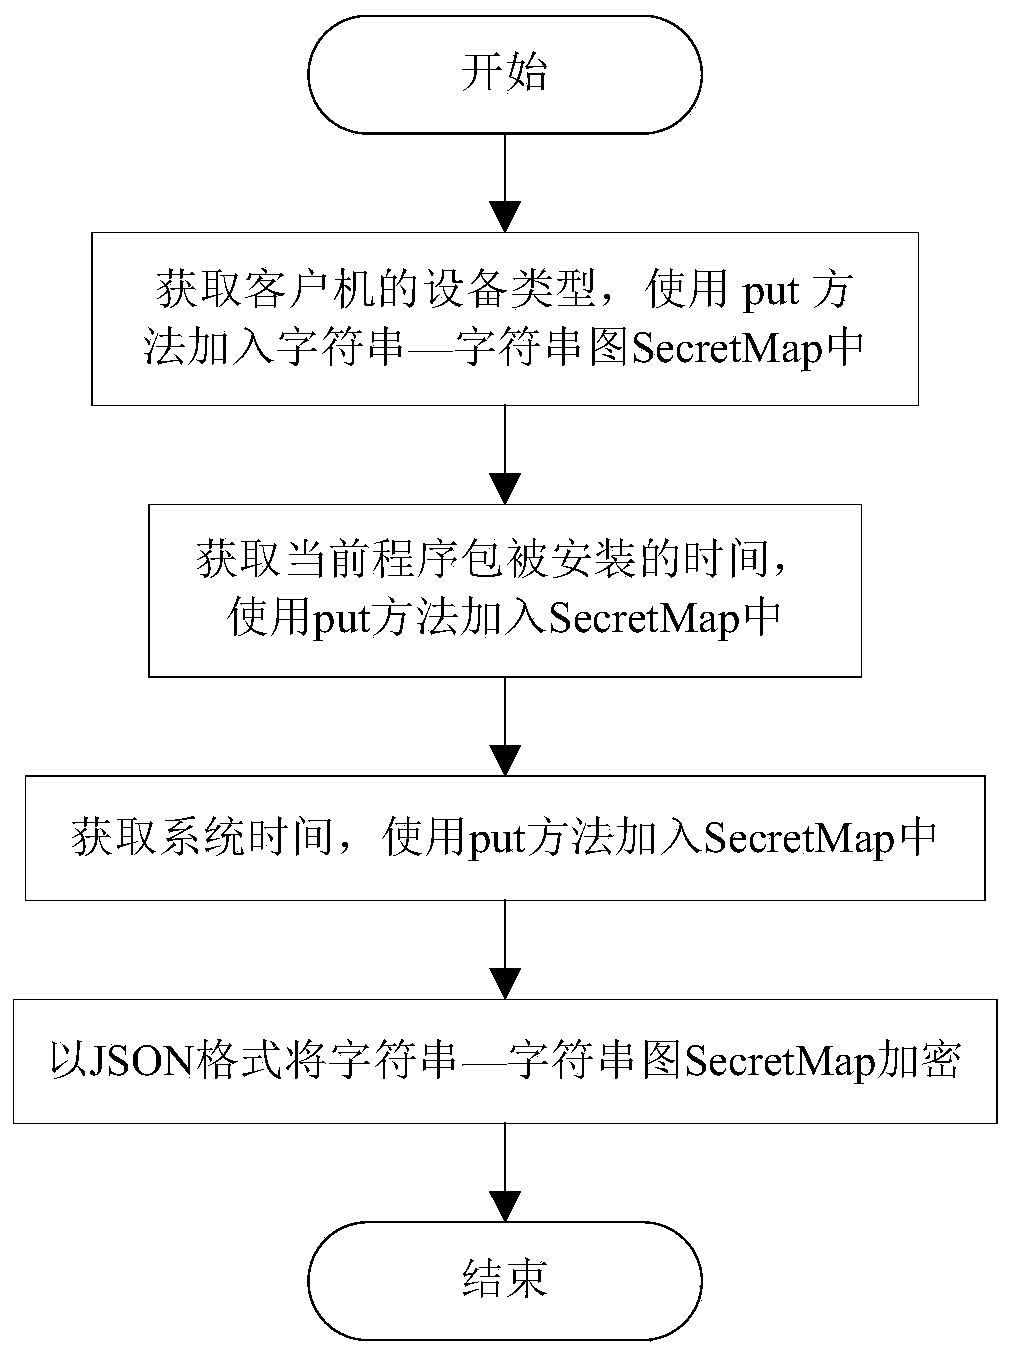 A single-system multi-platform authentication method